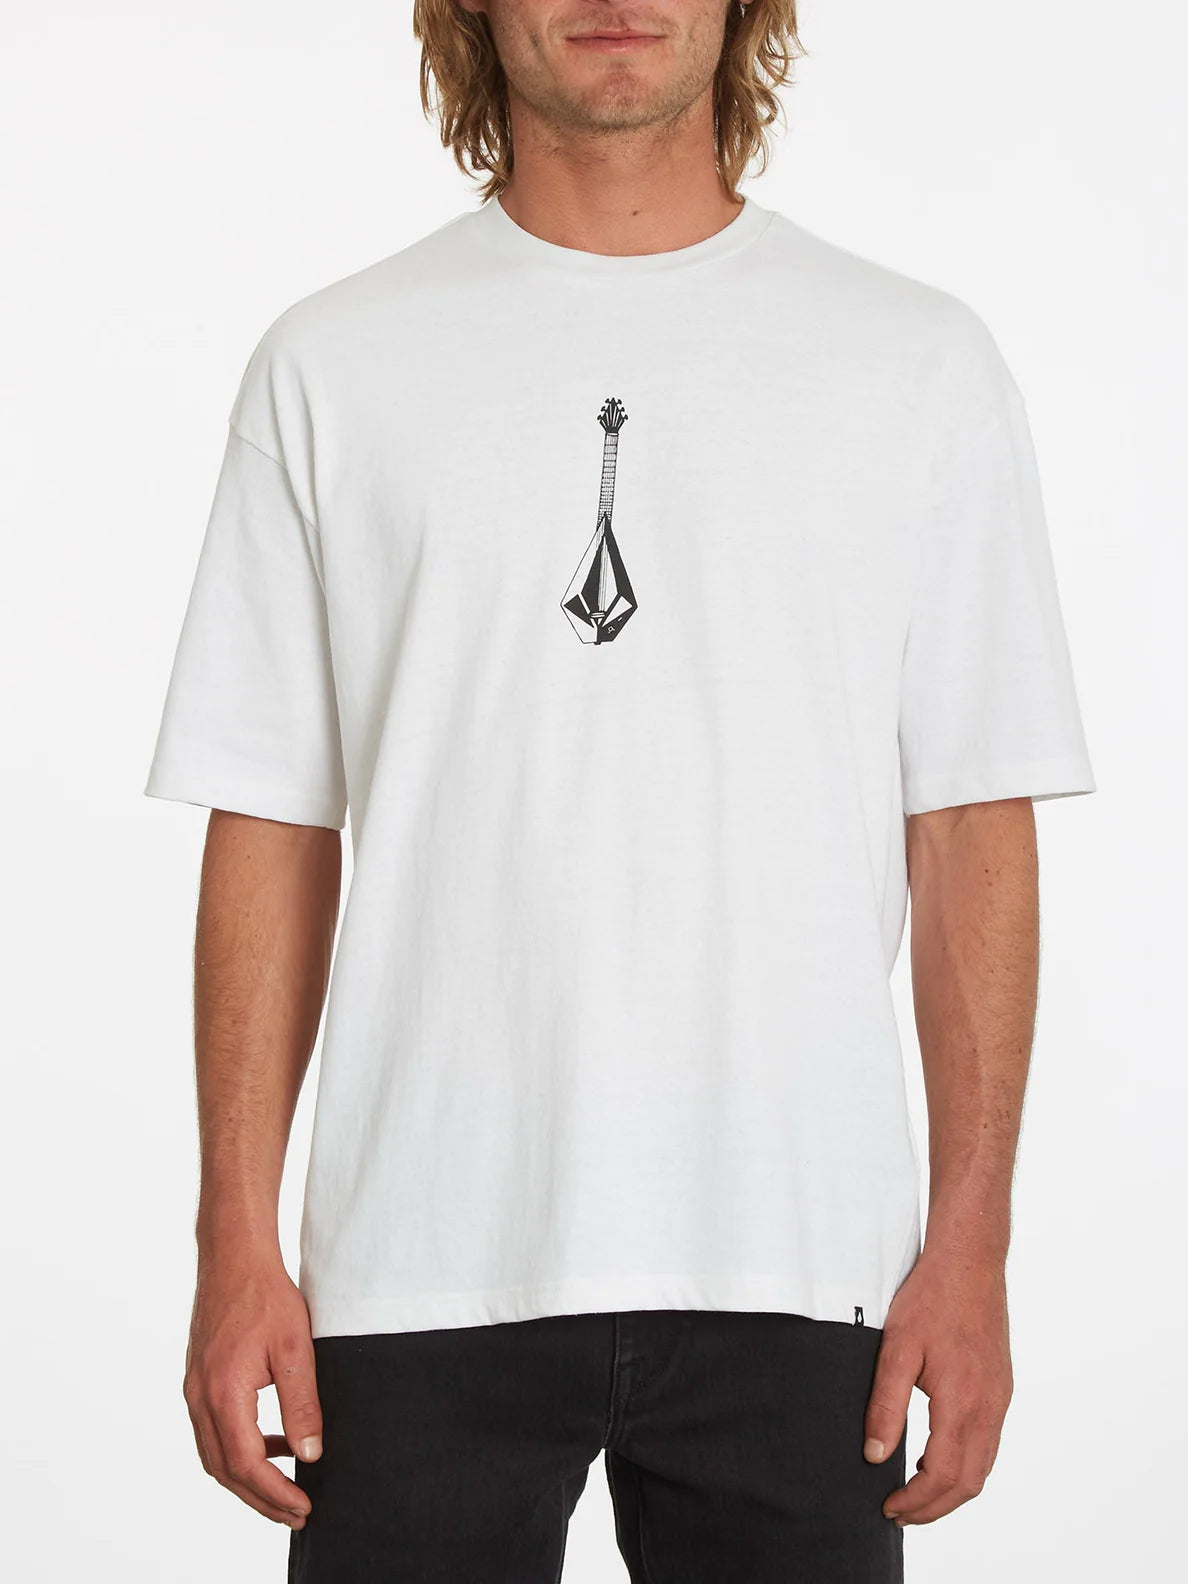 Volcom Shredead Weißes T-Shirt | Meistverkaufte Produkte | Neue Produkte | Neueste Produkte | surfdevils.com